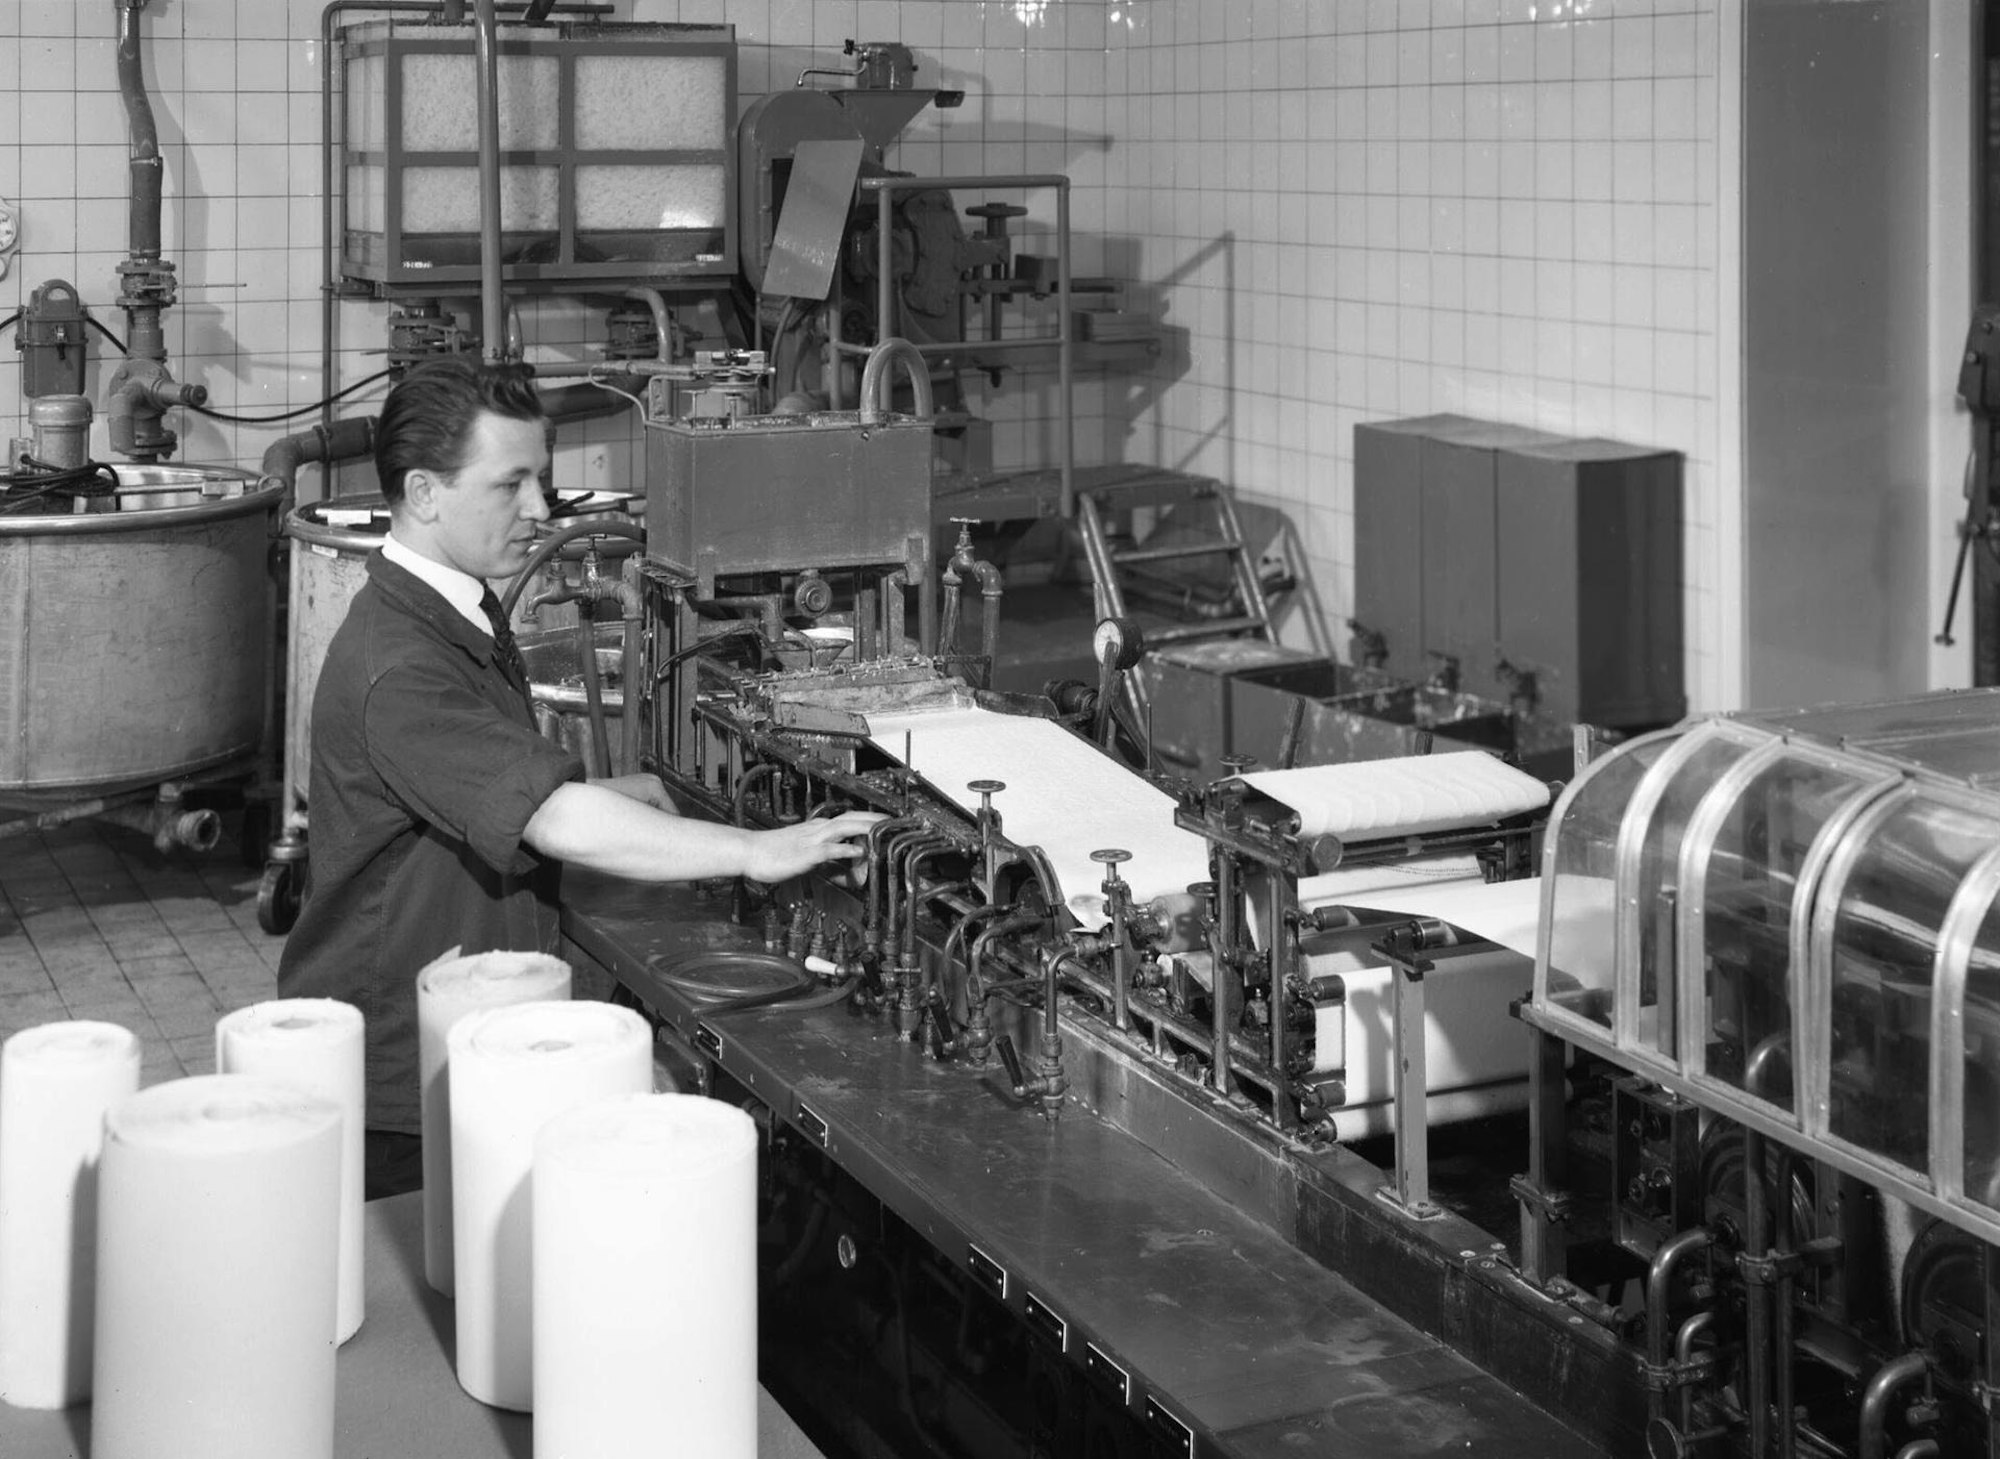 Blankophor Herstellung 1962 Credit Bayer AG - Bayer Archives Leverkusen